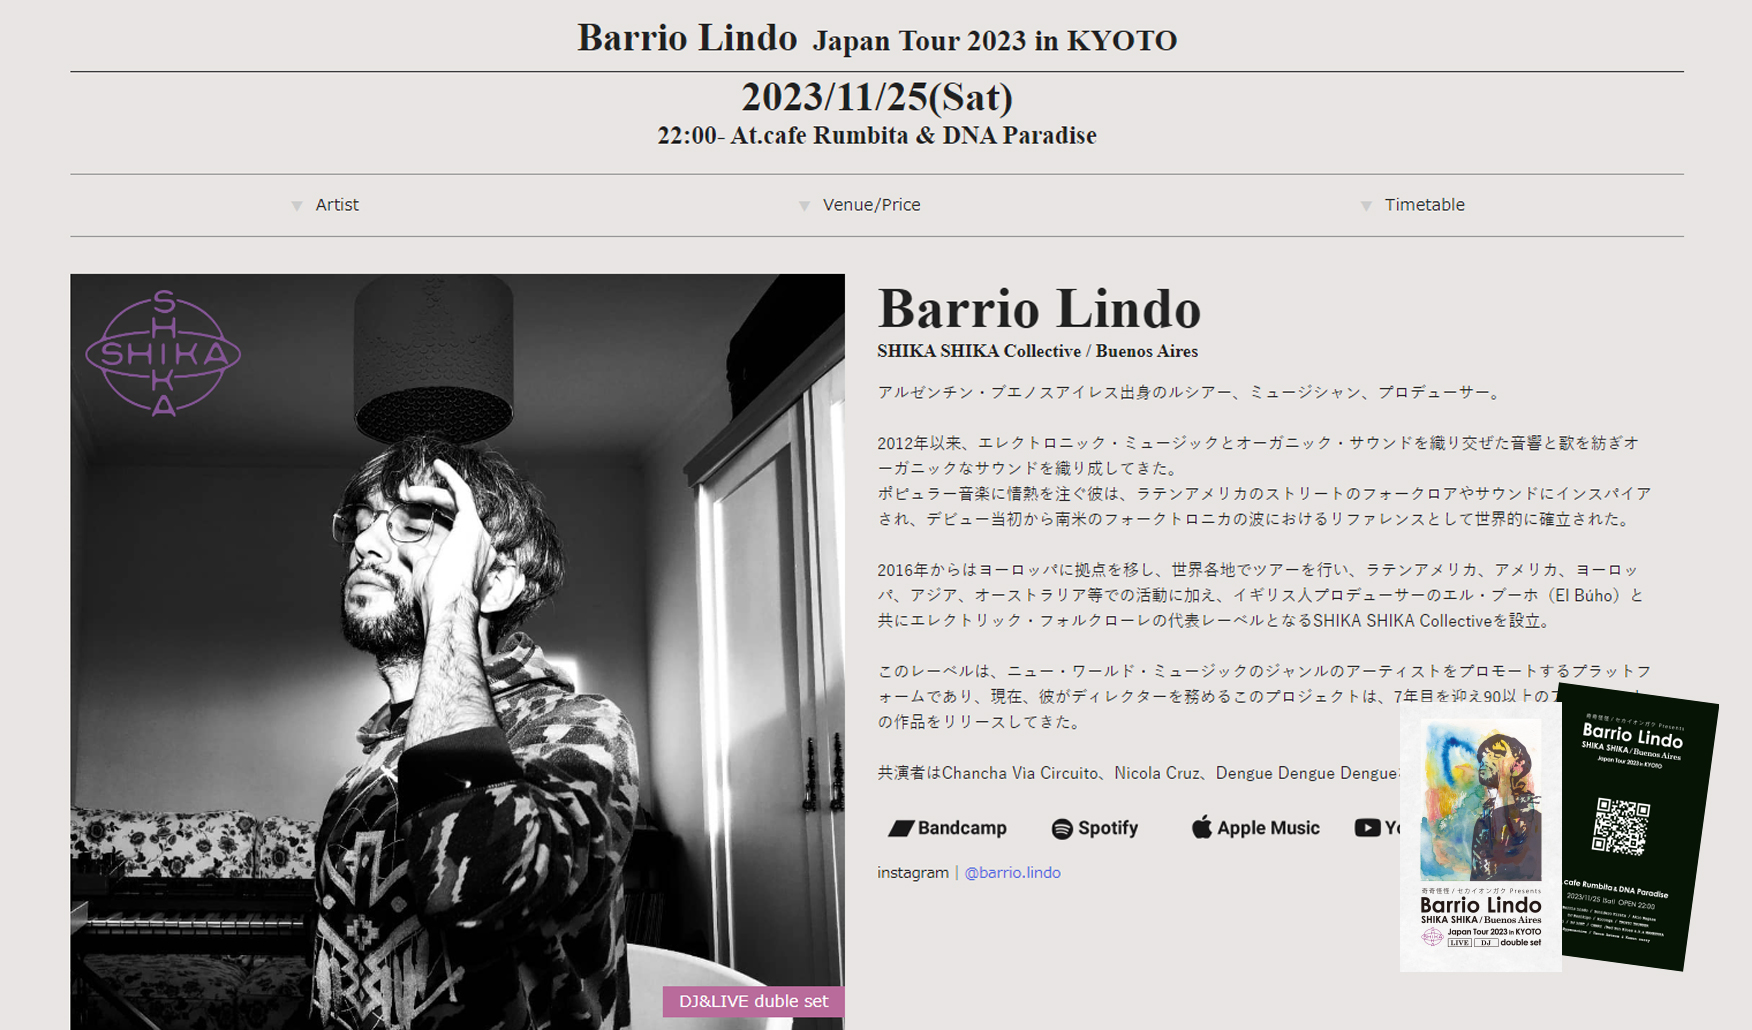 Barrio LindoJapan Tour 2023 in KYOTO